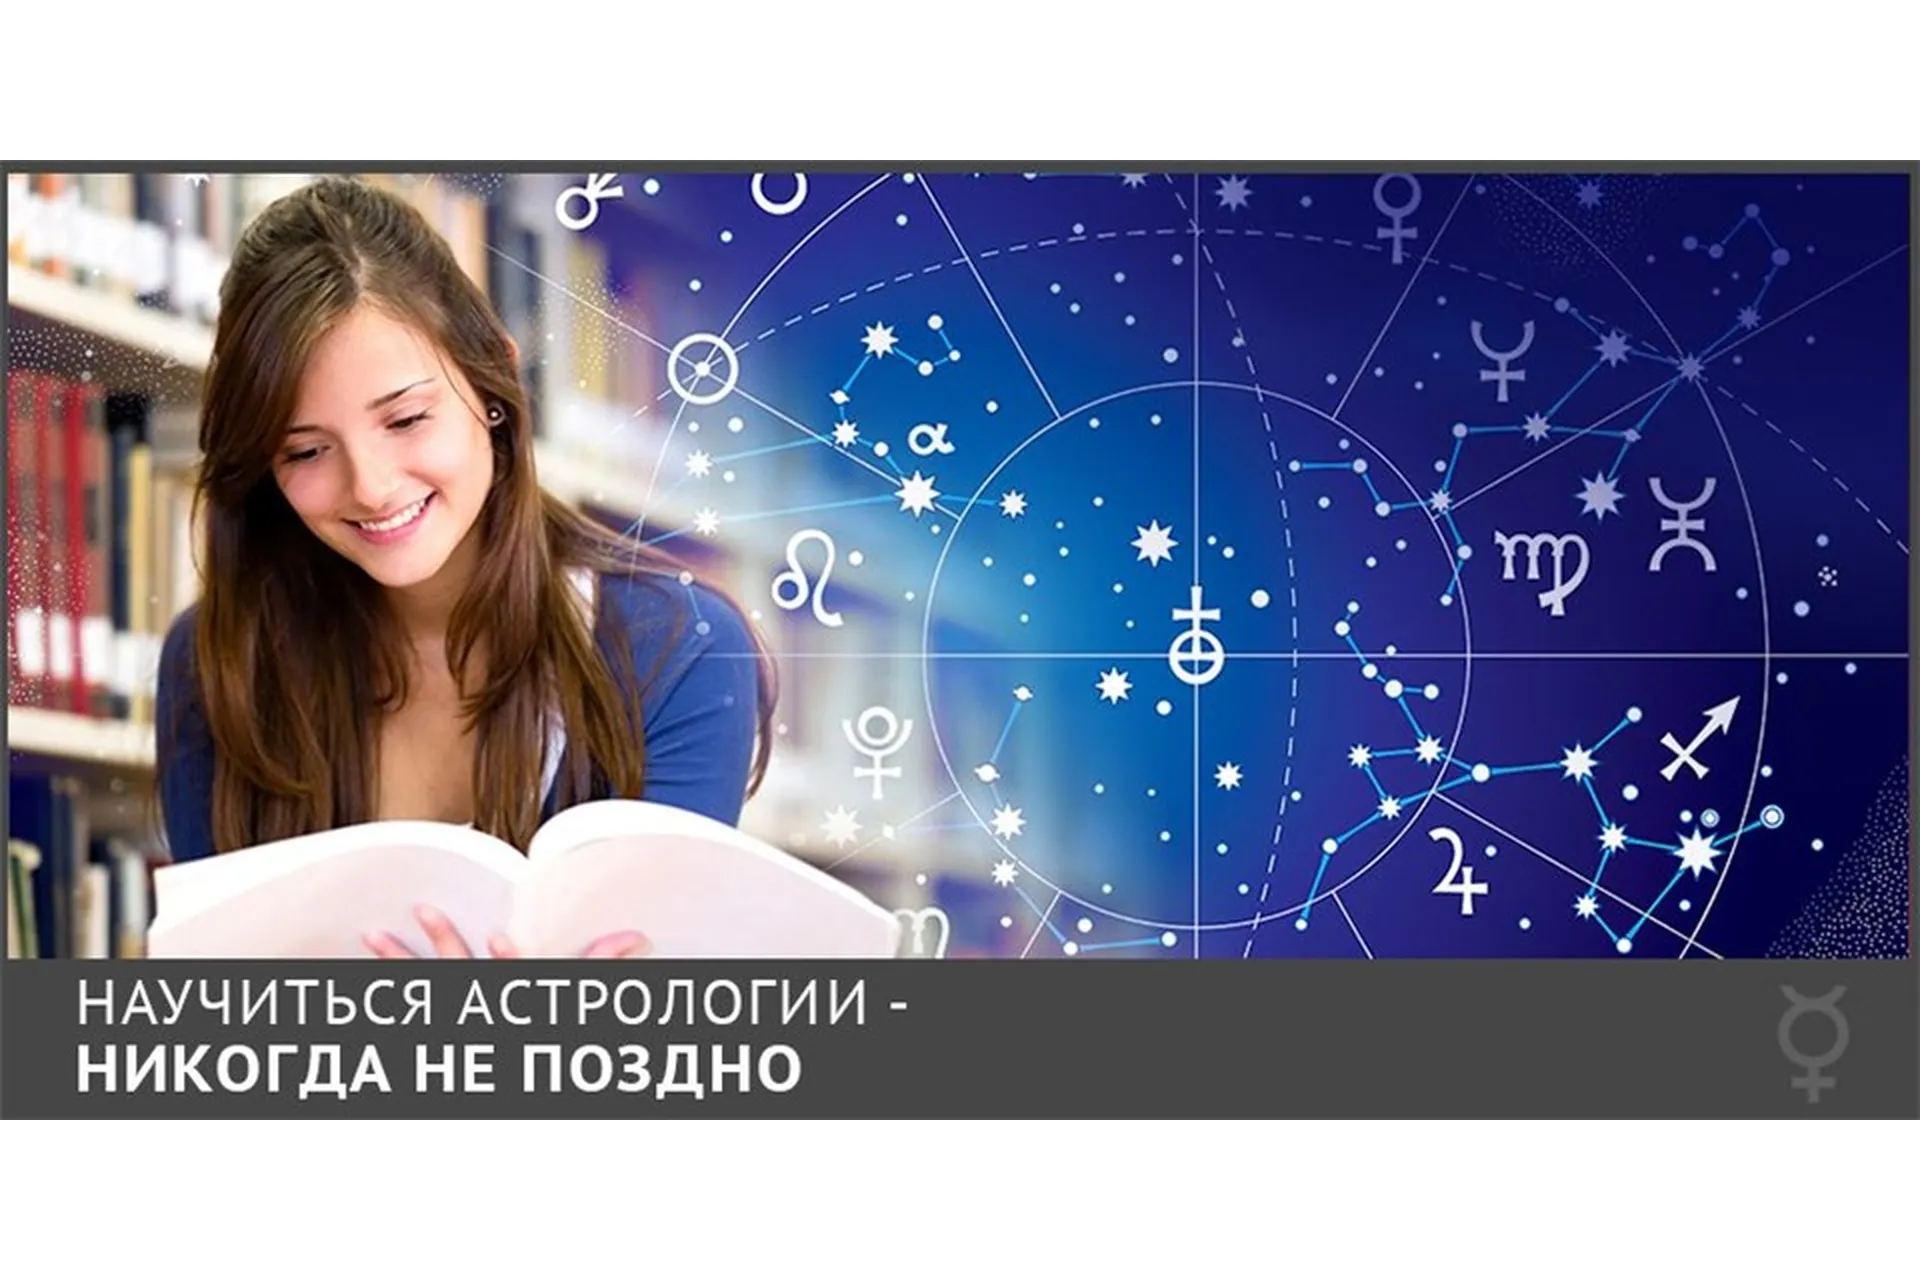 Астрология обучение. Изучение астрологии. Обучение астрологии. Астролог учеба. Учиться на астролога.